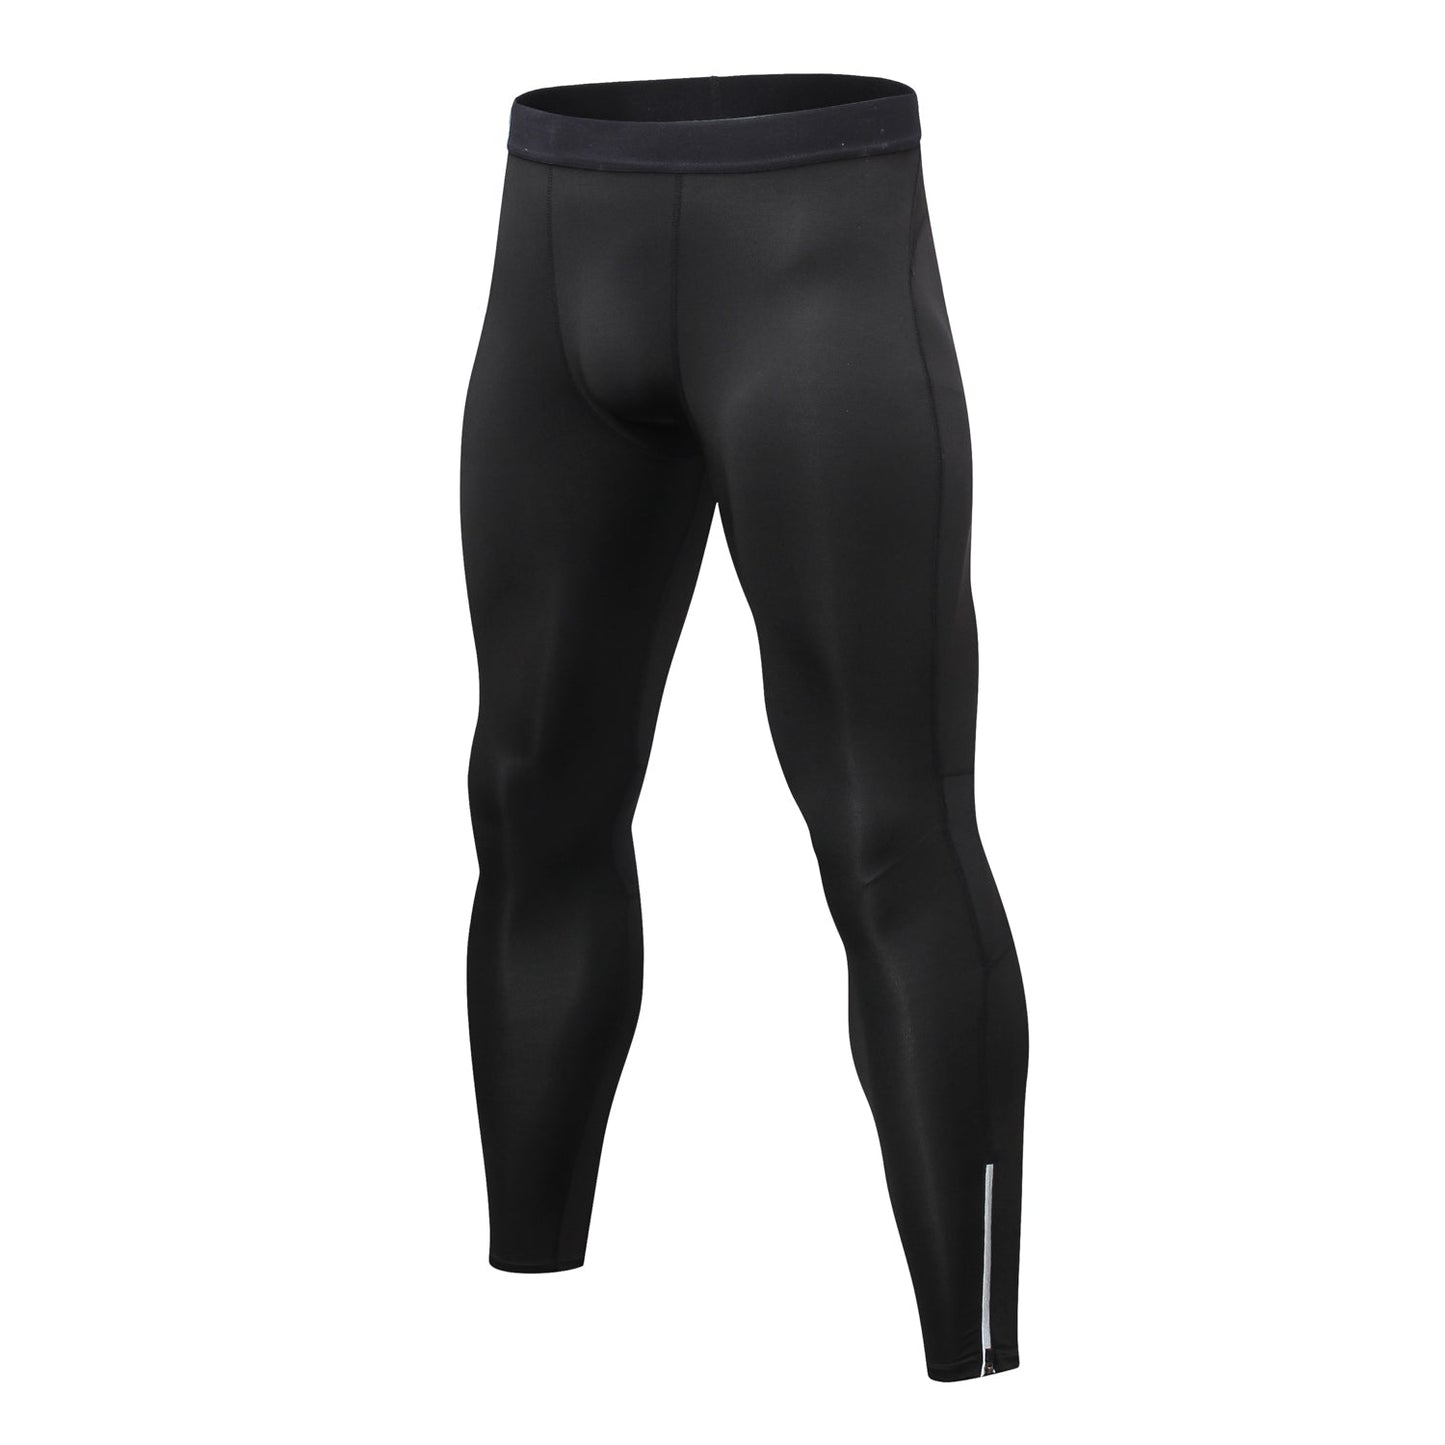 Men's Calf Length Compression Pants Leggings Athletic Baselayer Running  Bottoms